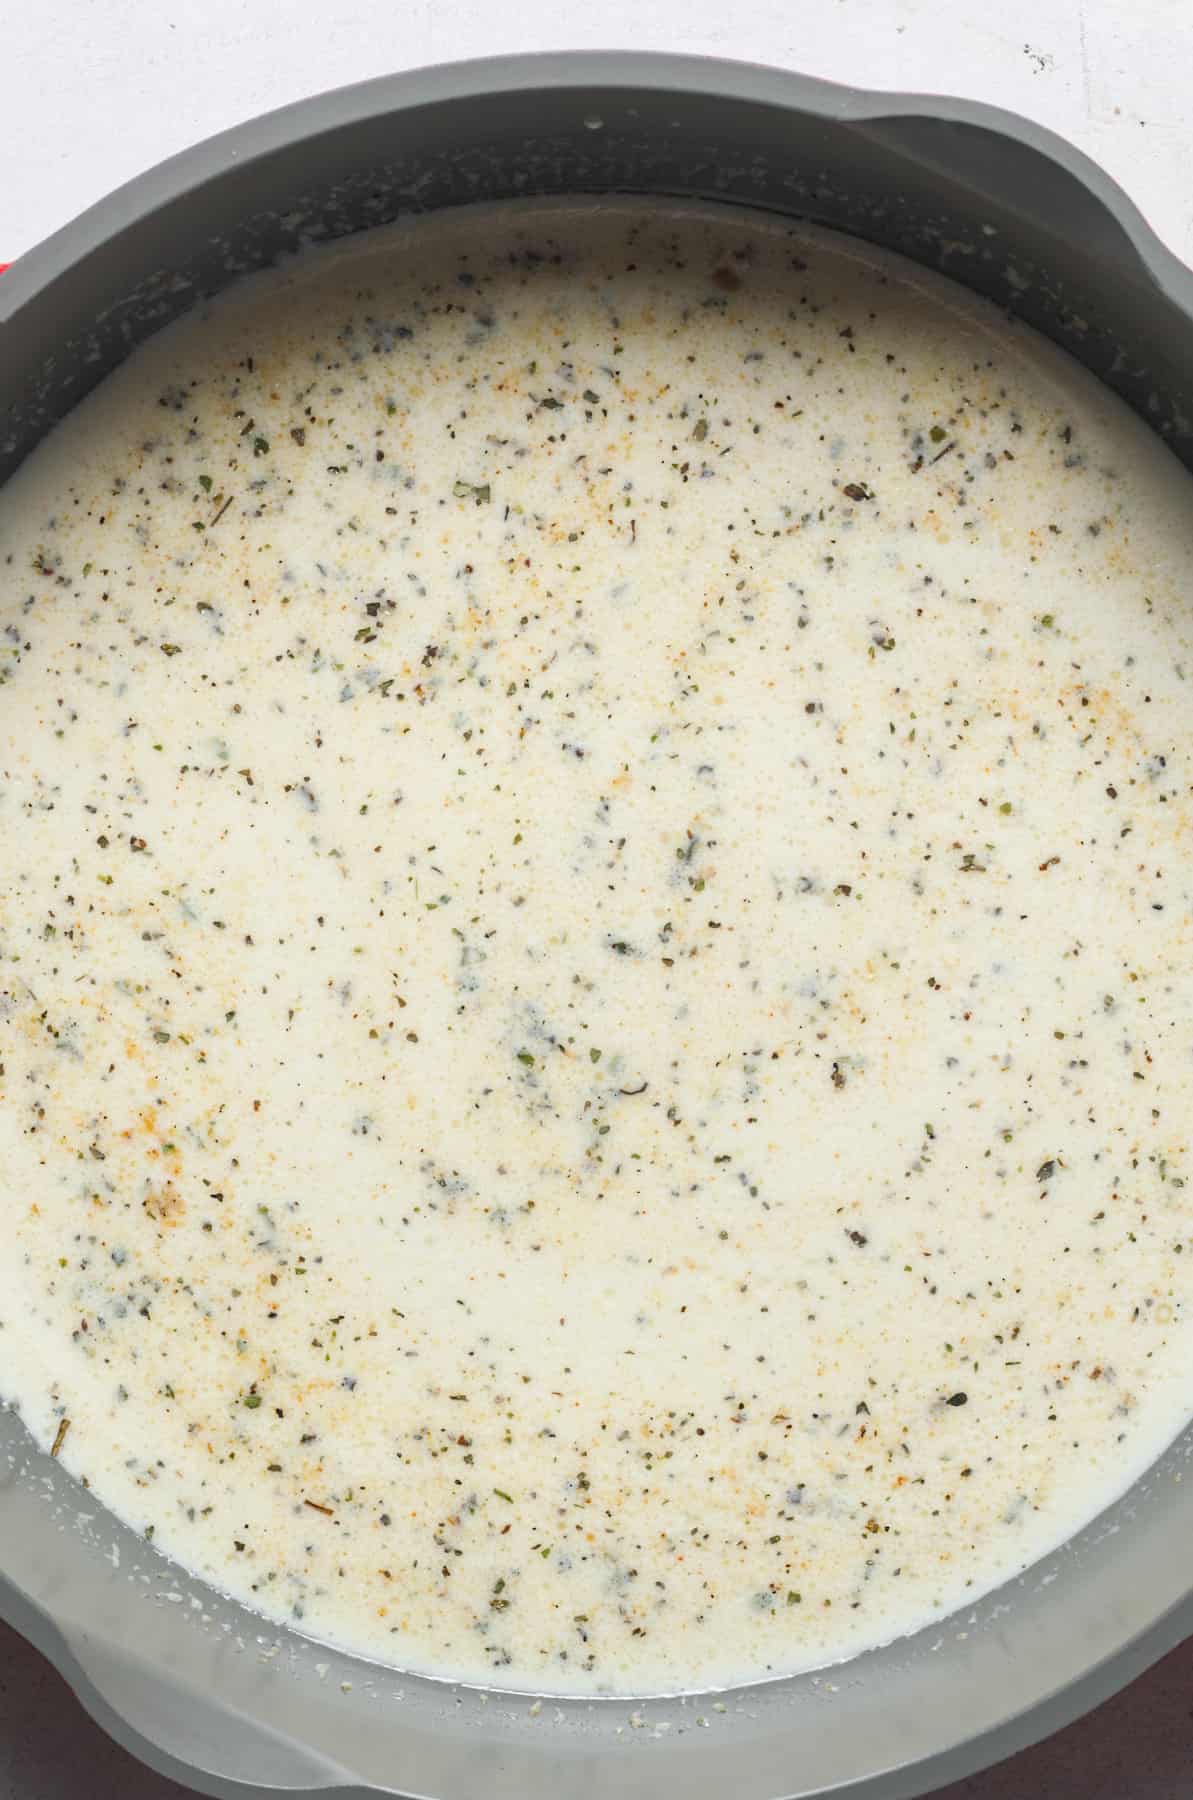 Creamy sauce in pan.